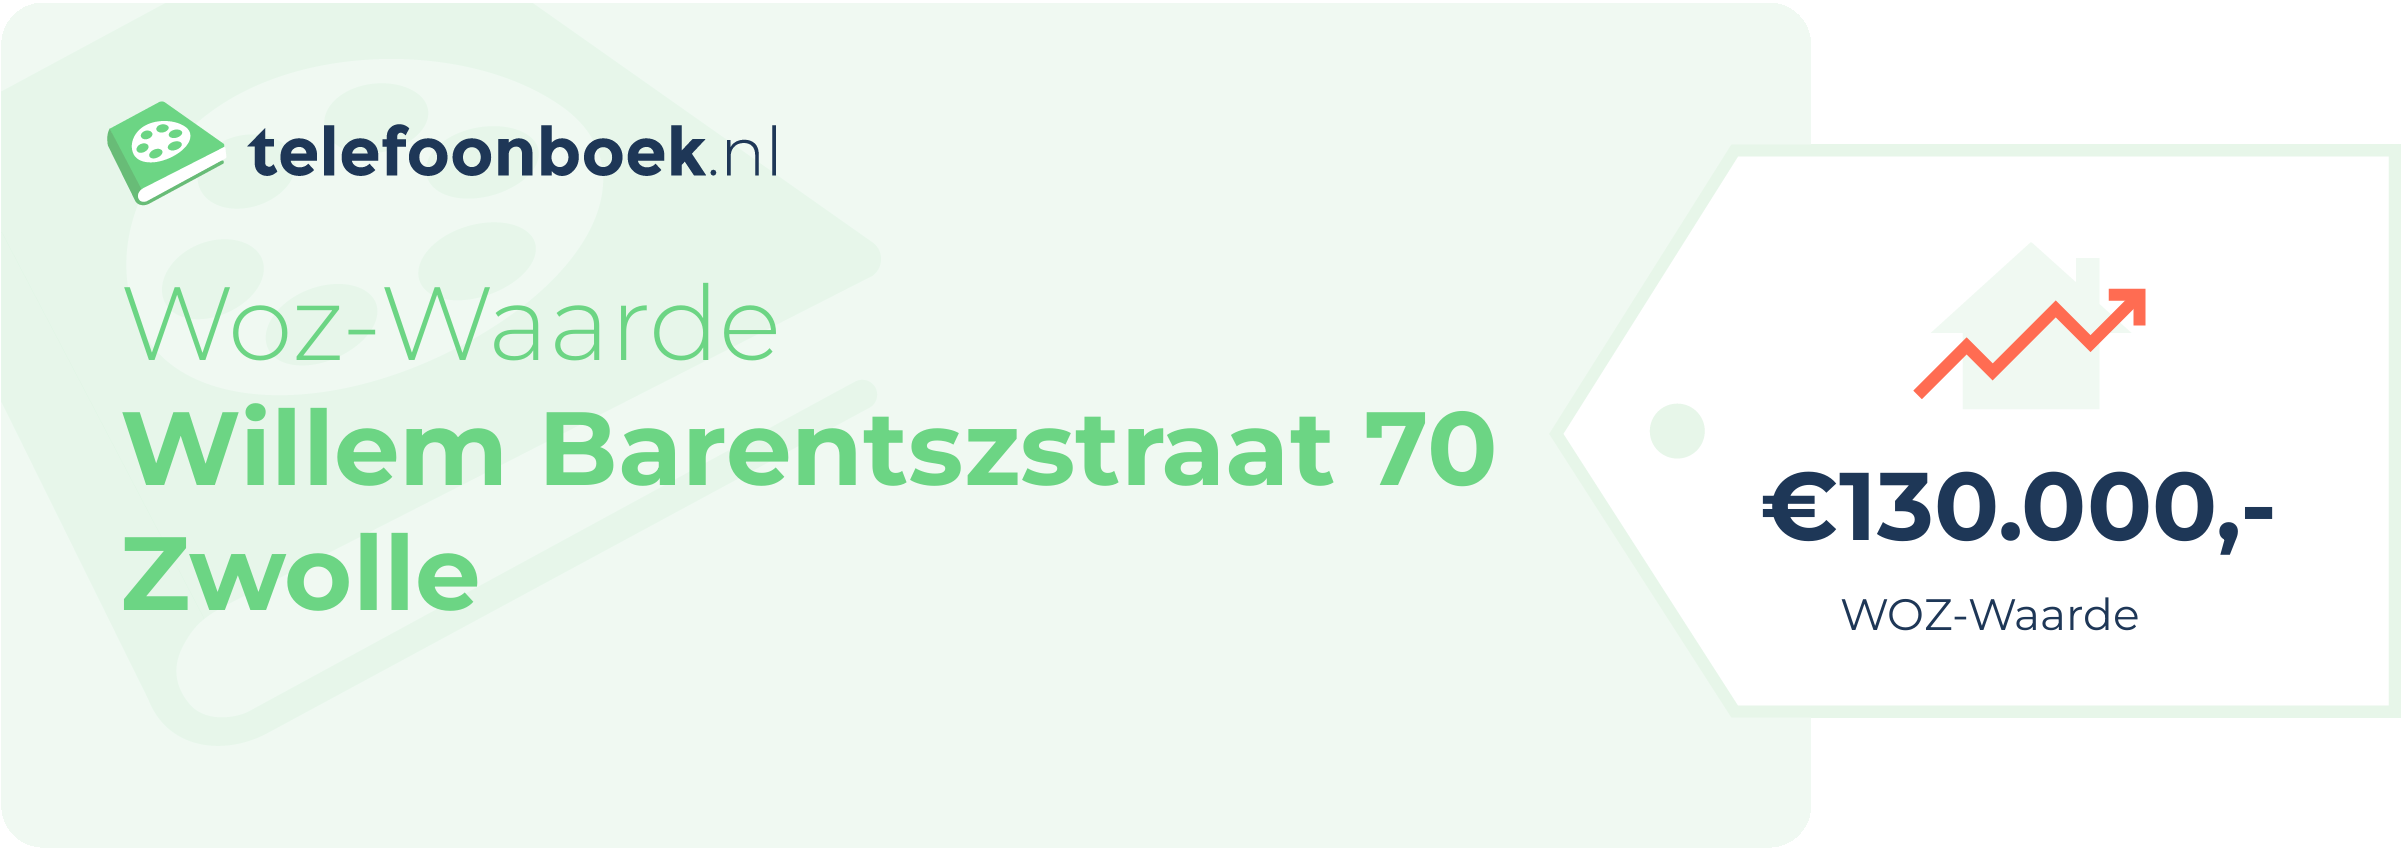 WOZ-waarde Willem Barentszstraat 70 Zwolle